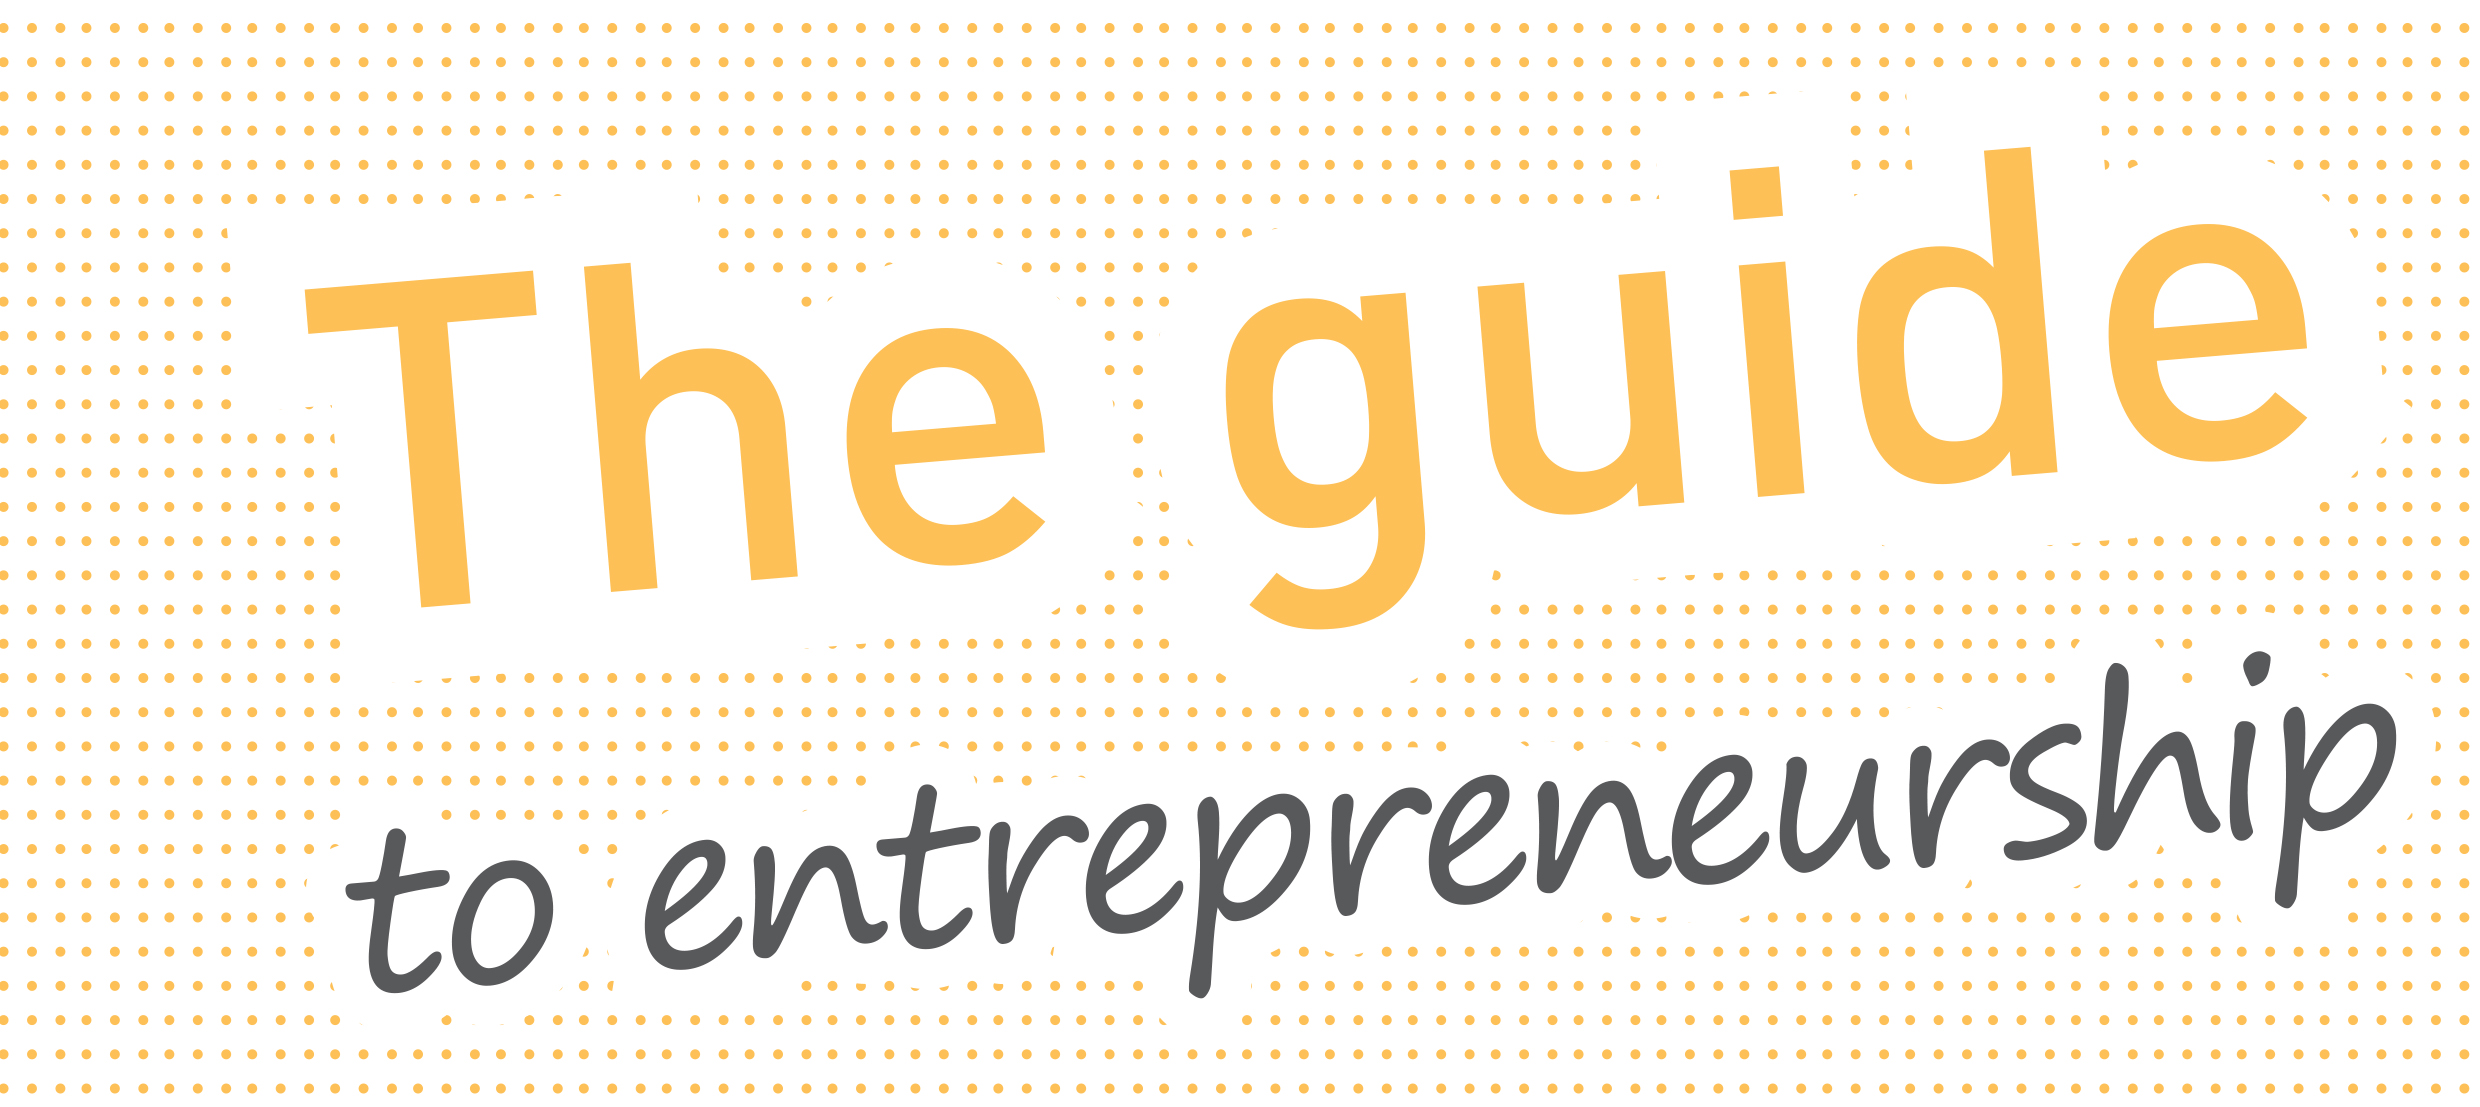 the guide to entrepreneurship